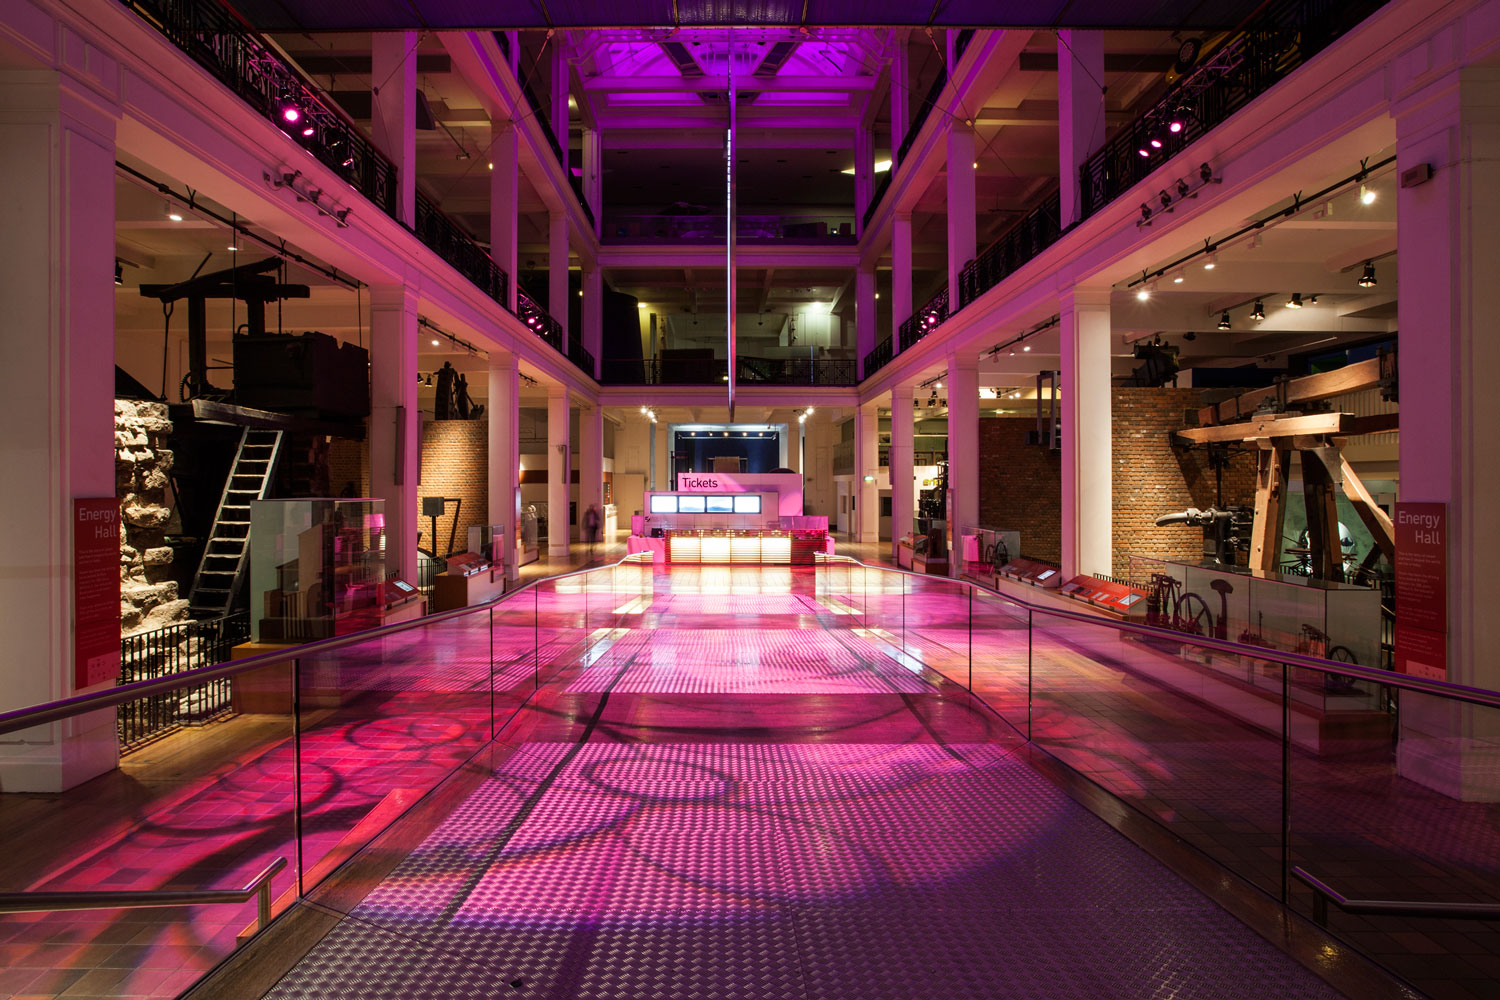 The Energy Hall, illuminated in pink light